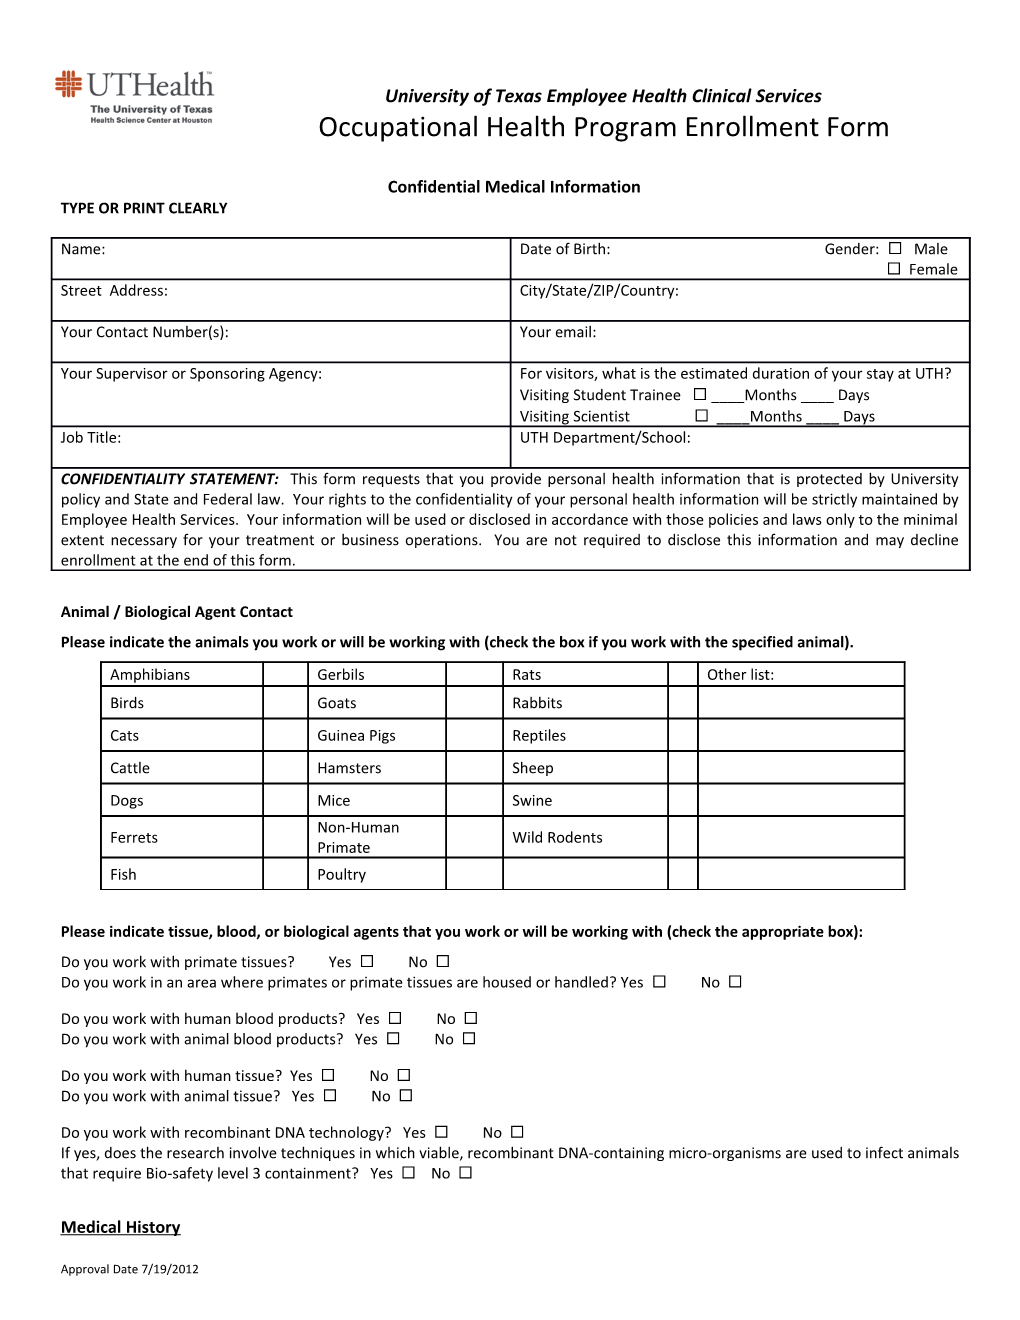 Occupational Health Program Enrollment Form